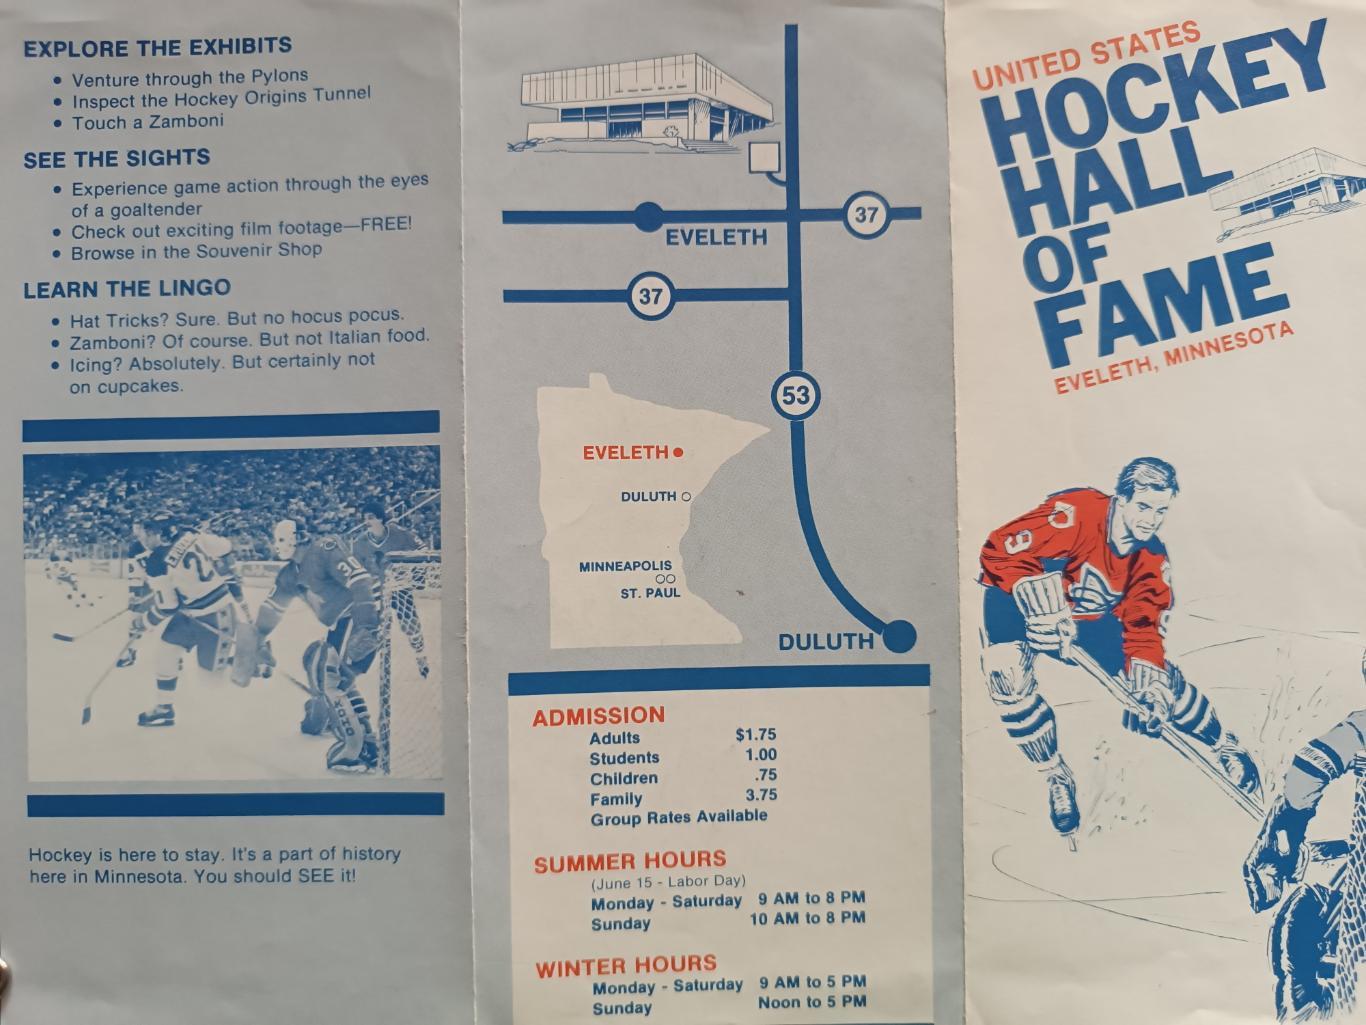 ХОККЕЙ БУКЛЕТ СУВЕНИР ЗАЛ СЛАВЫ ЭВЕЛЕТ 1975 NHL HALL OF FAME EVELETH MINNESOTA 4